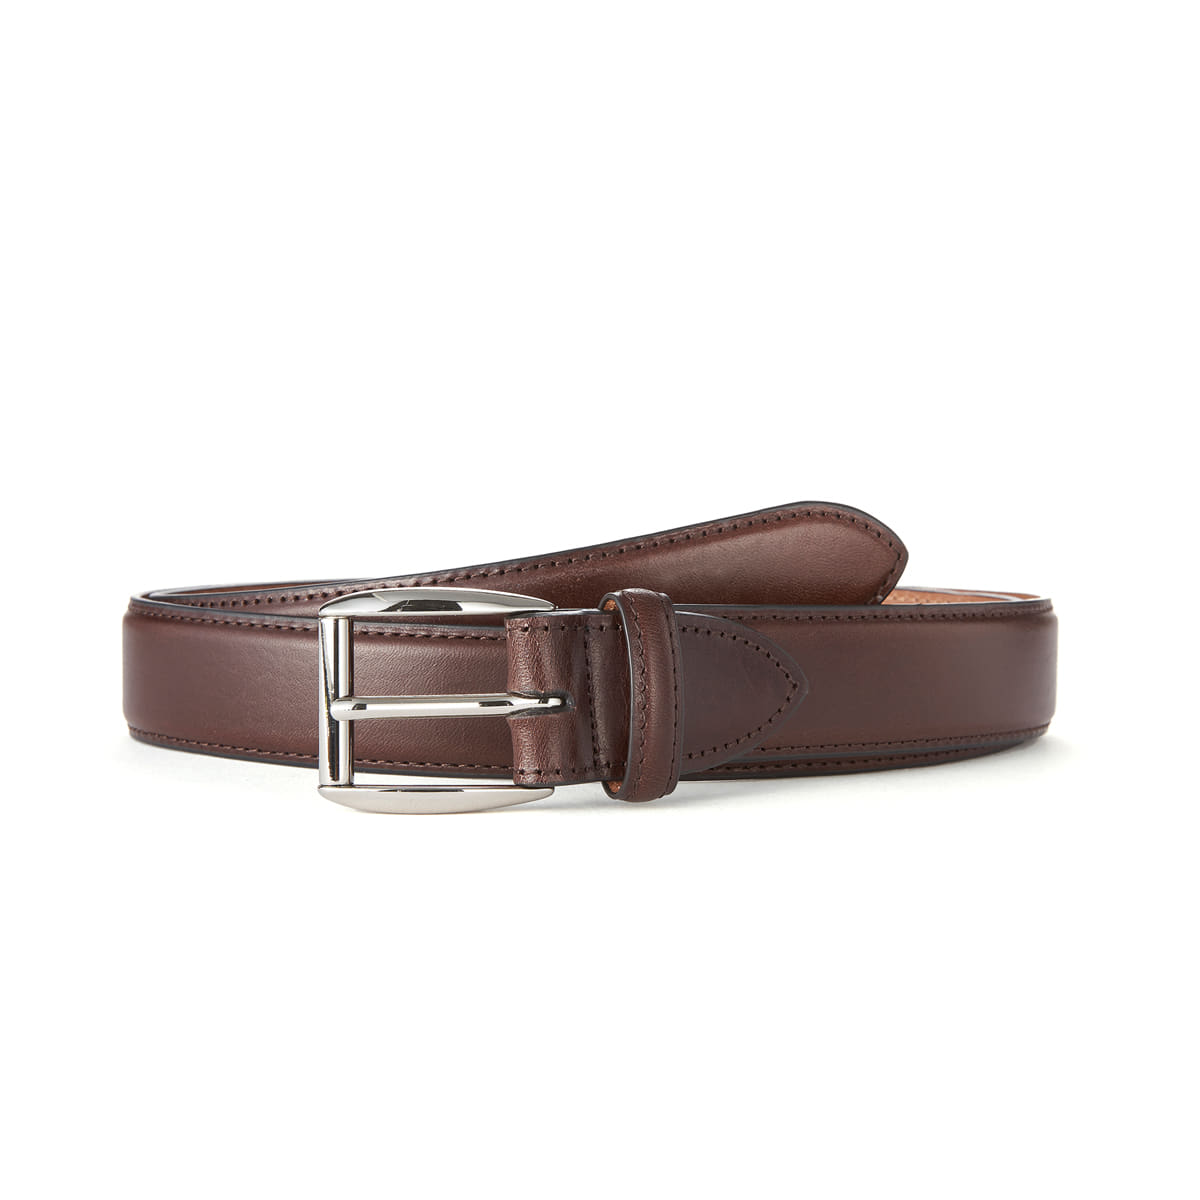 Dk brown leather belt (Silver Buckle)